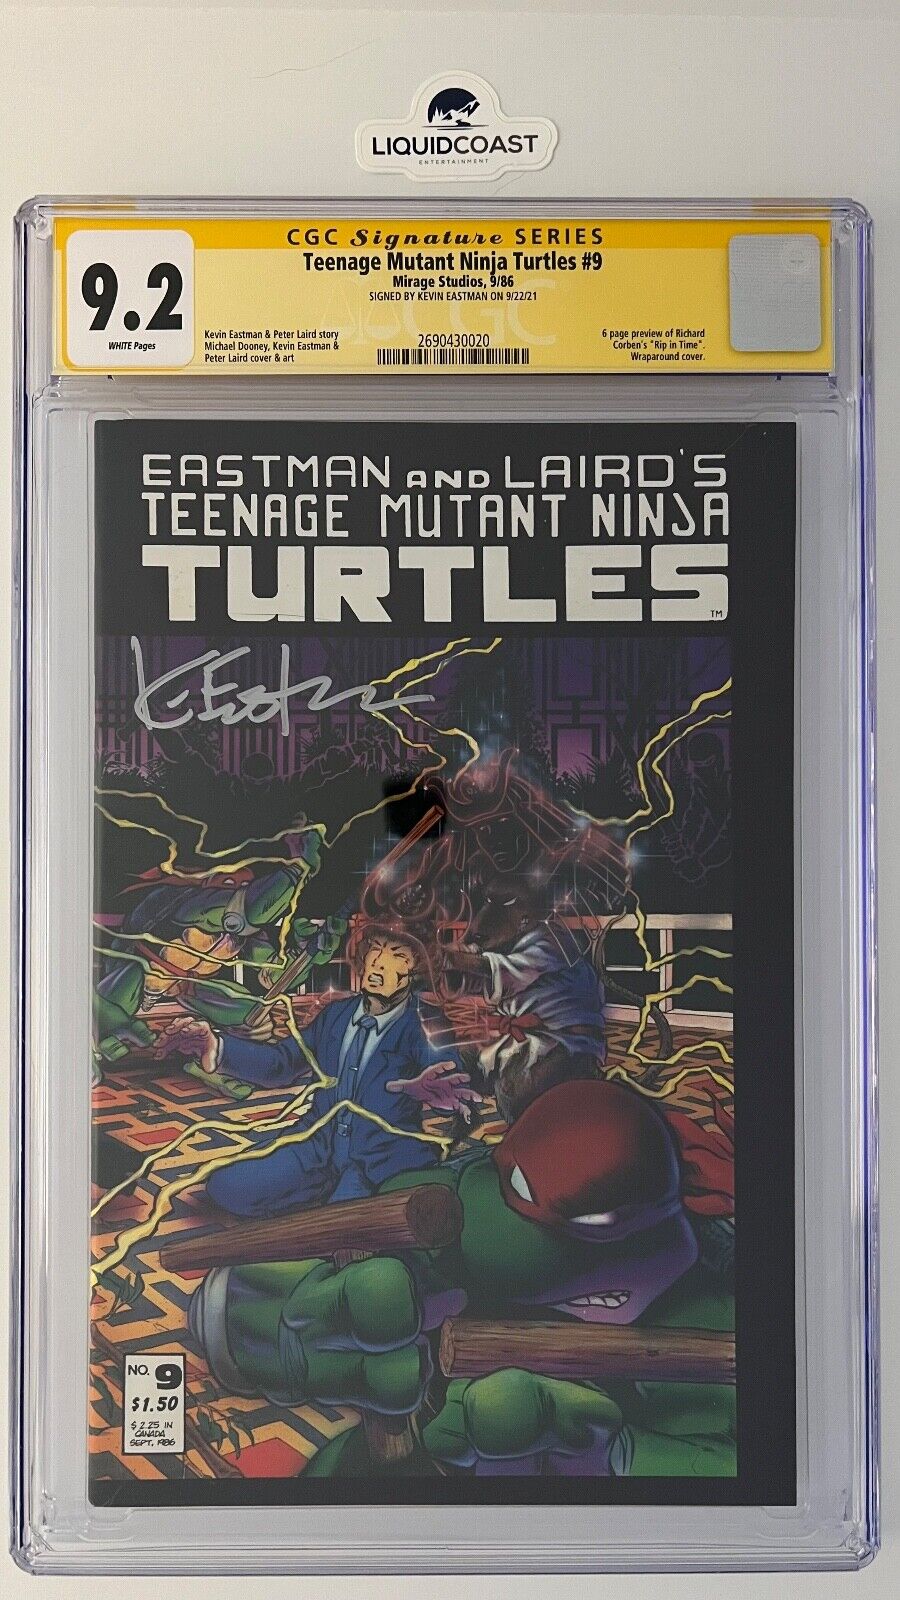 Teenage Mutant Ninja Turtles #9 SS CGC 9.2 signed by Kevin Eastman